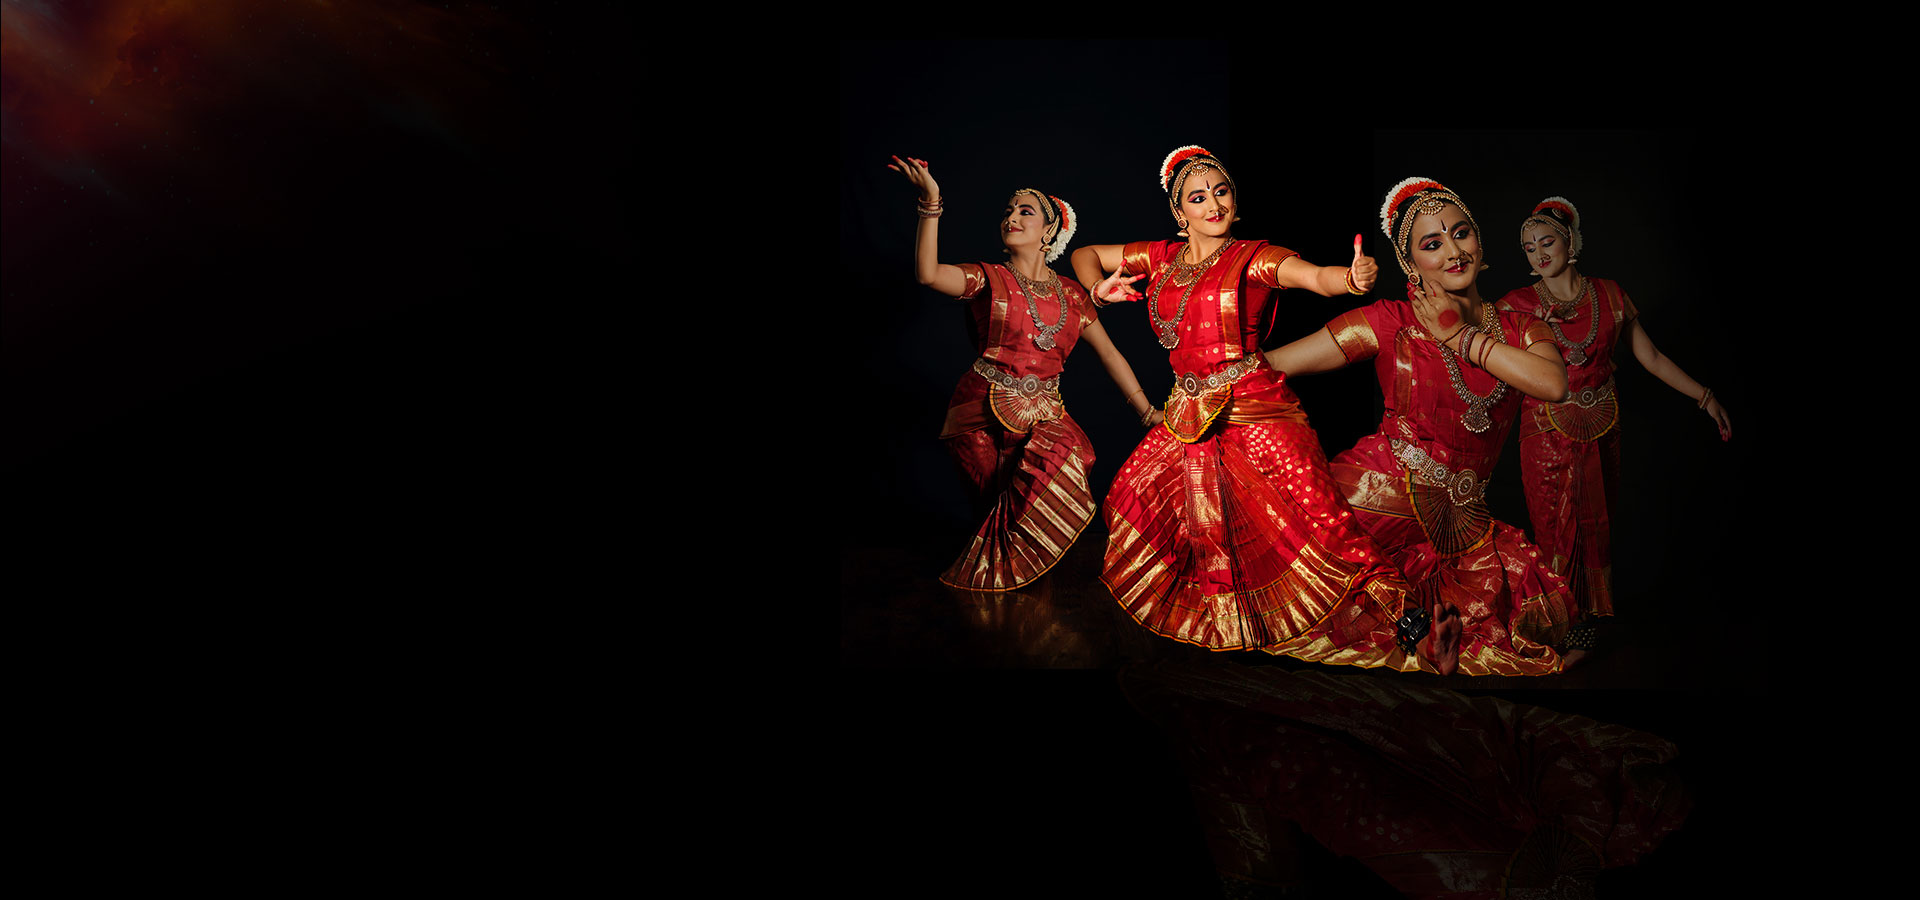 Group costume; colors | Bharatanatyam poses, Indian dance, Dance of india